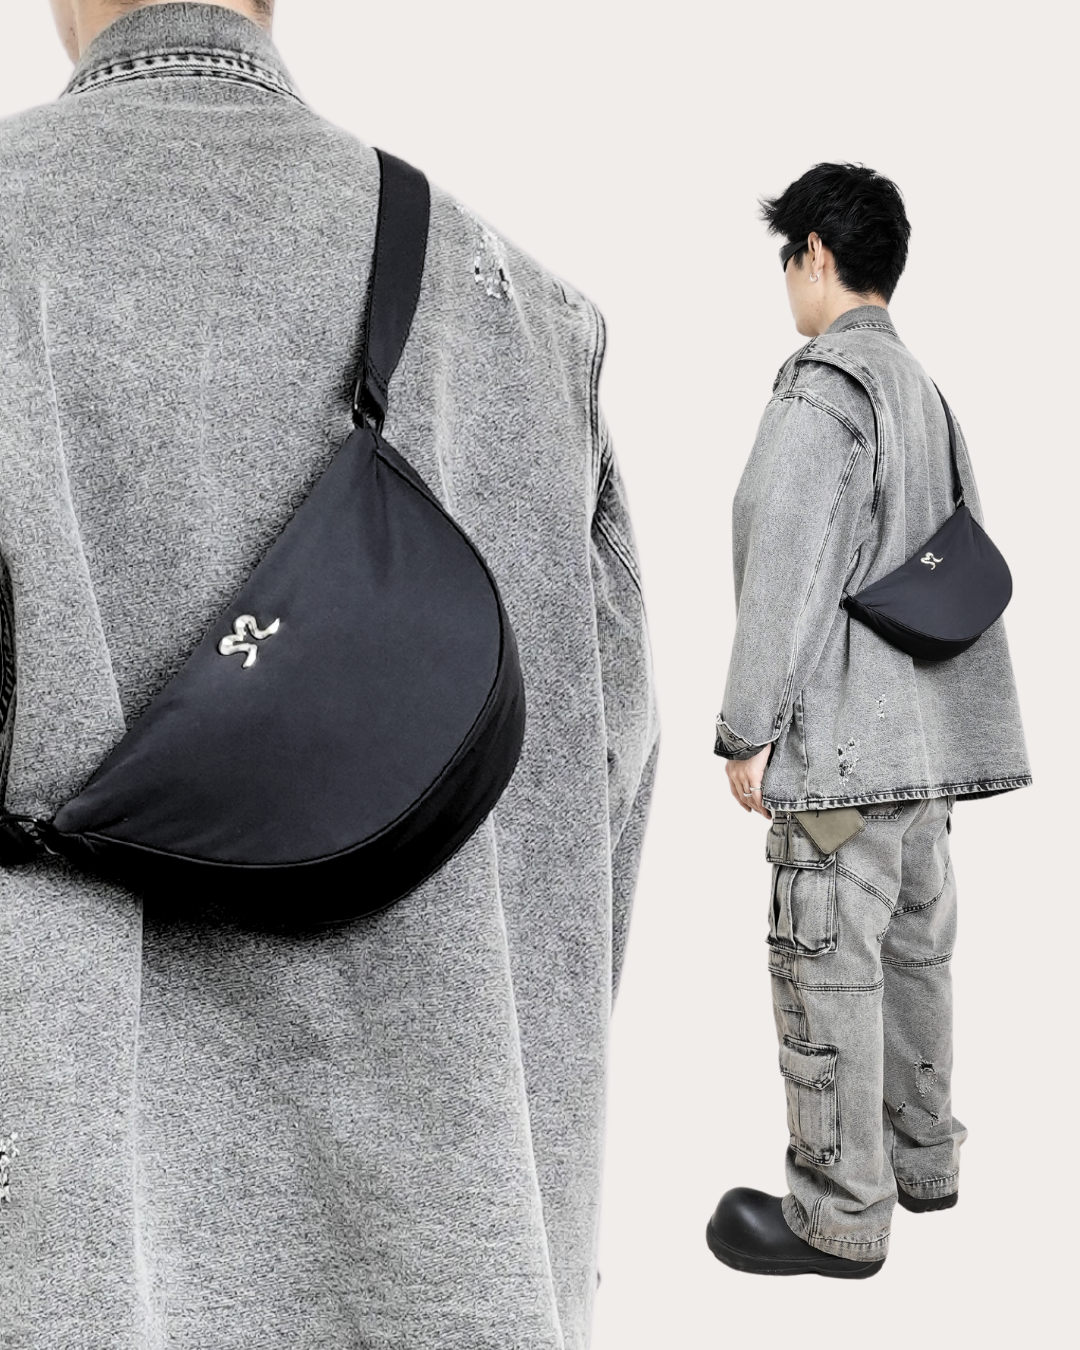 Nylon Mini Shoulder Bag